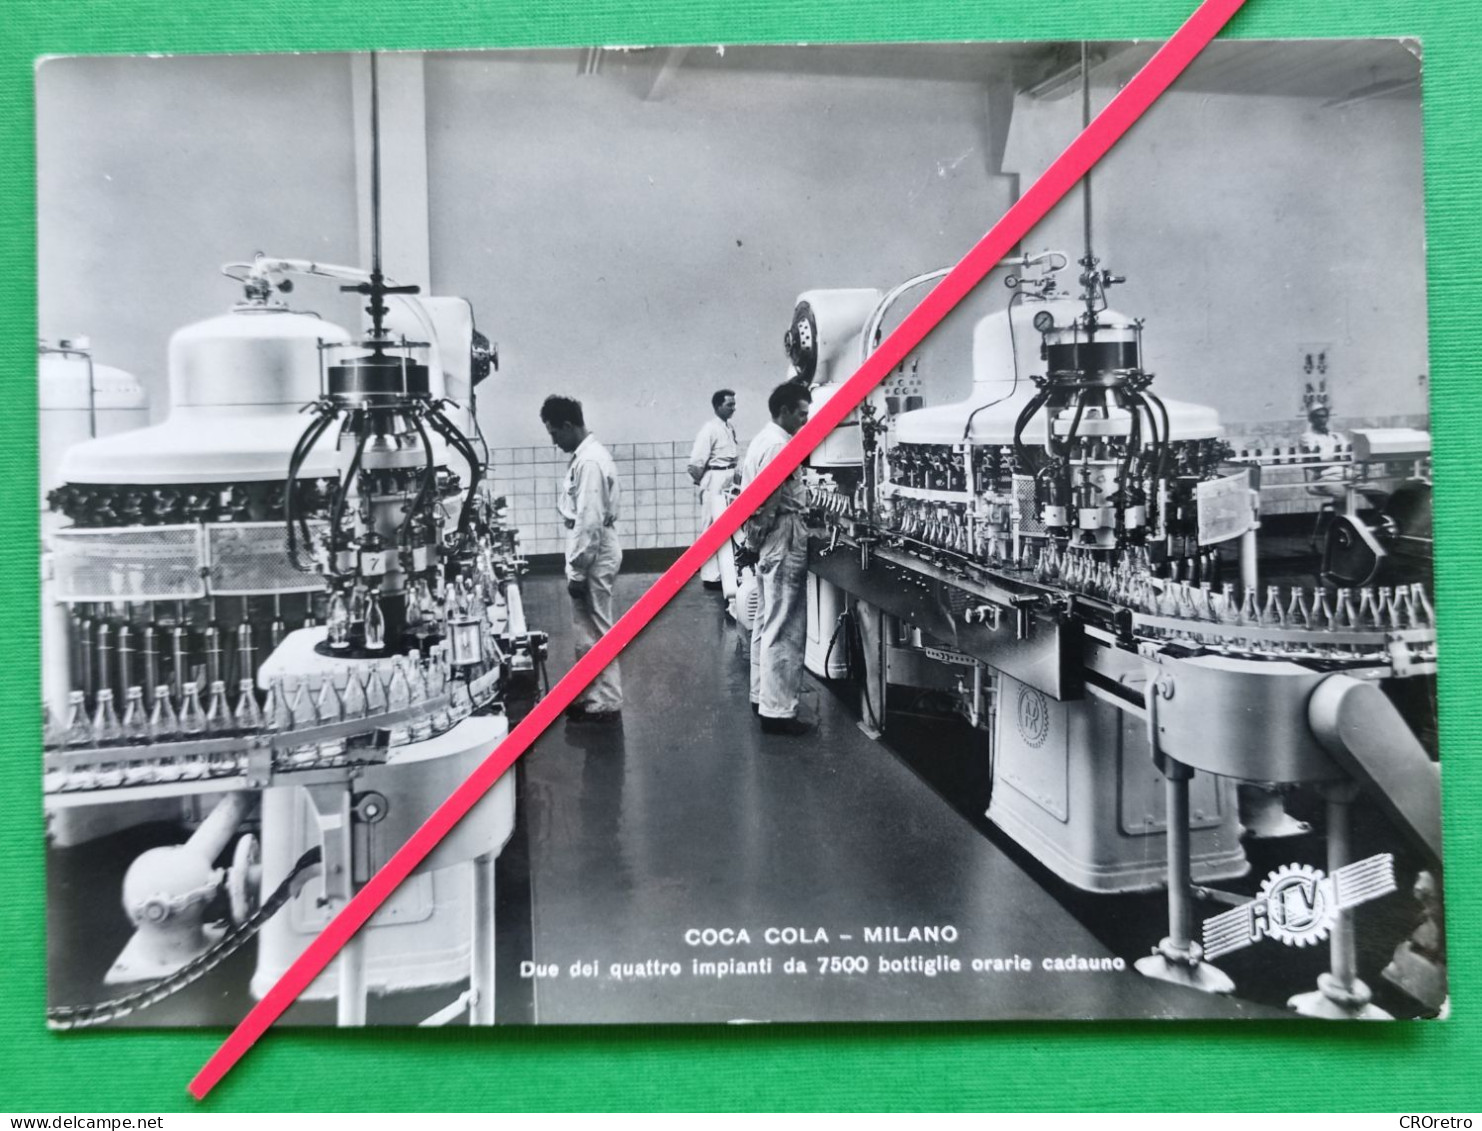 COCA COLA - MILANO, Factory Industrial Lines, Photo Postcard 1950's (DCP01) - Advertising